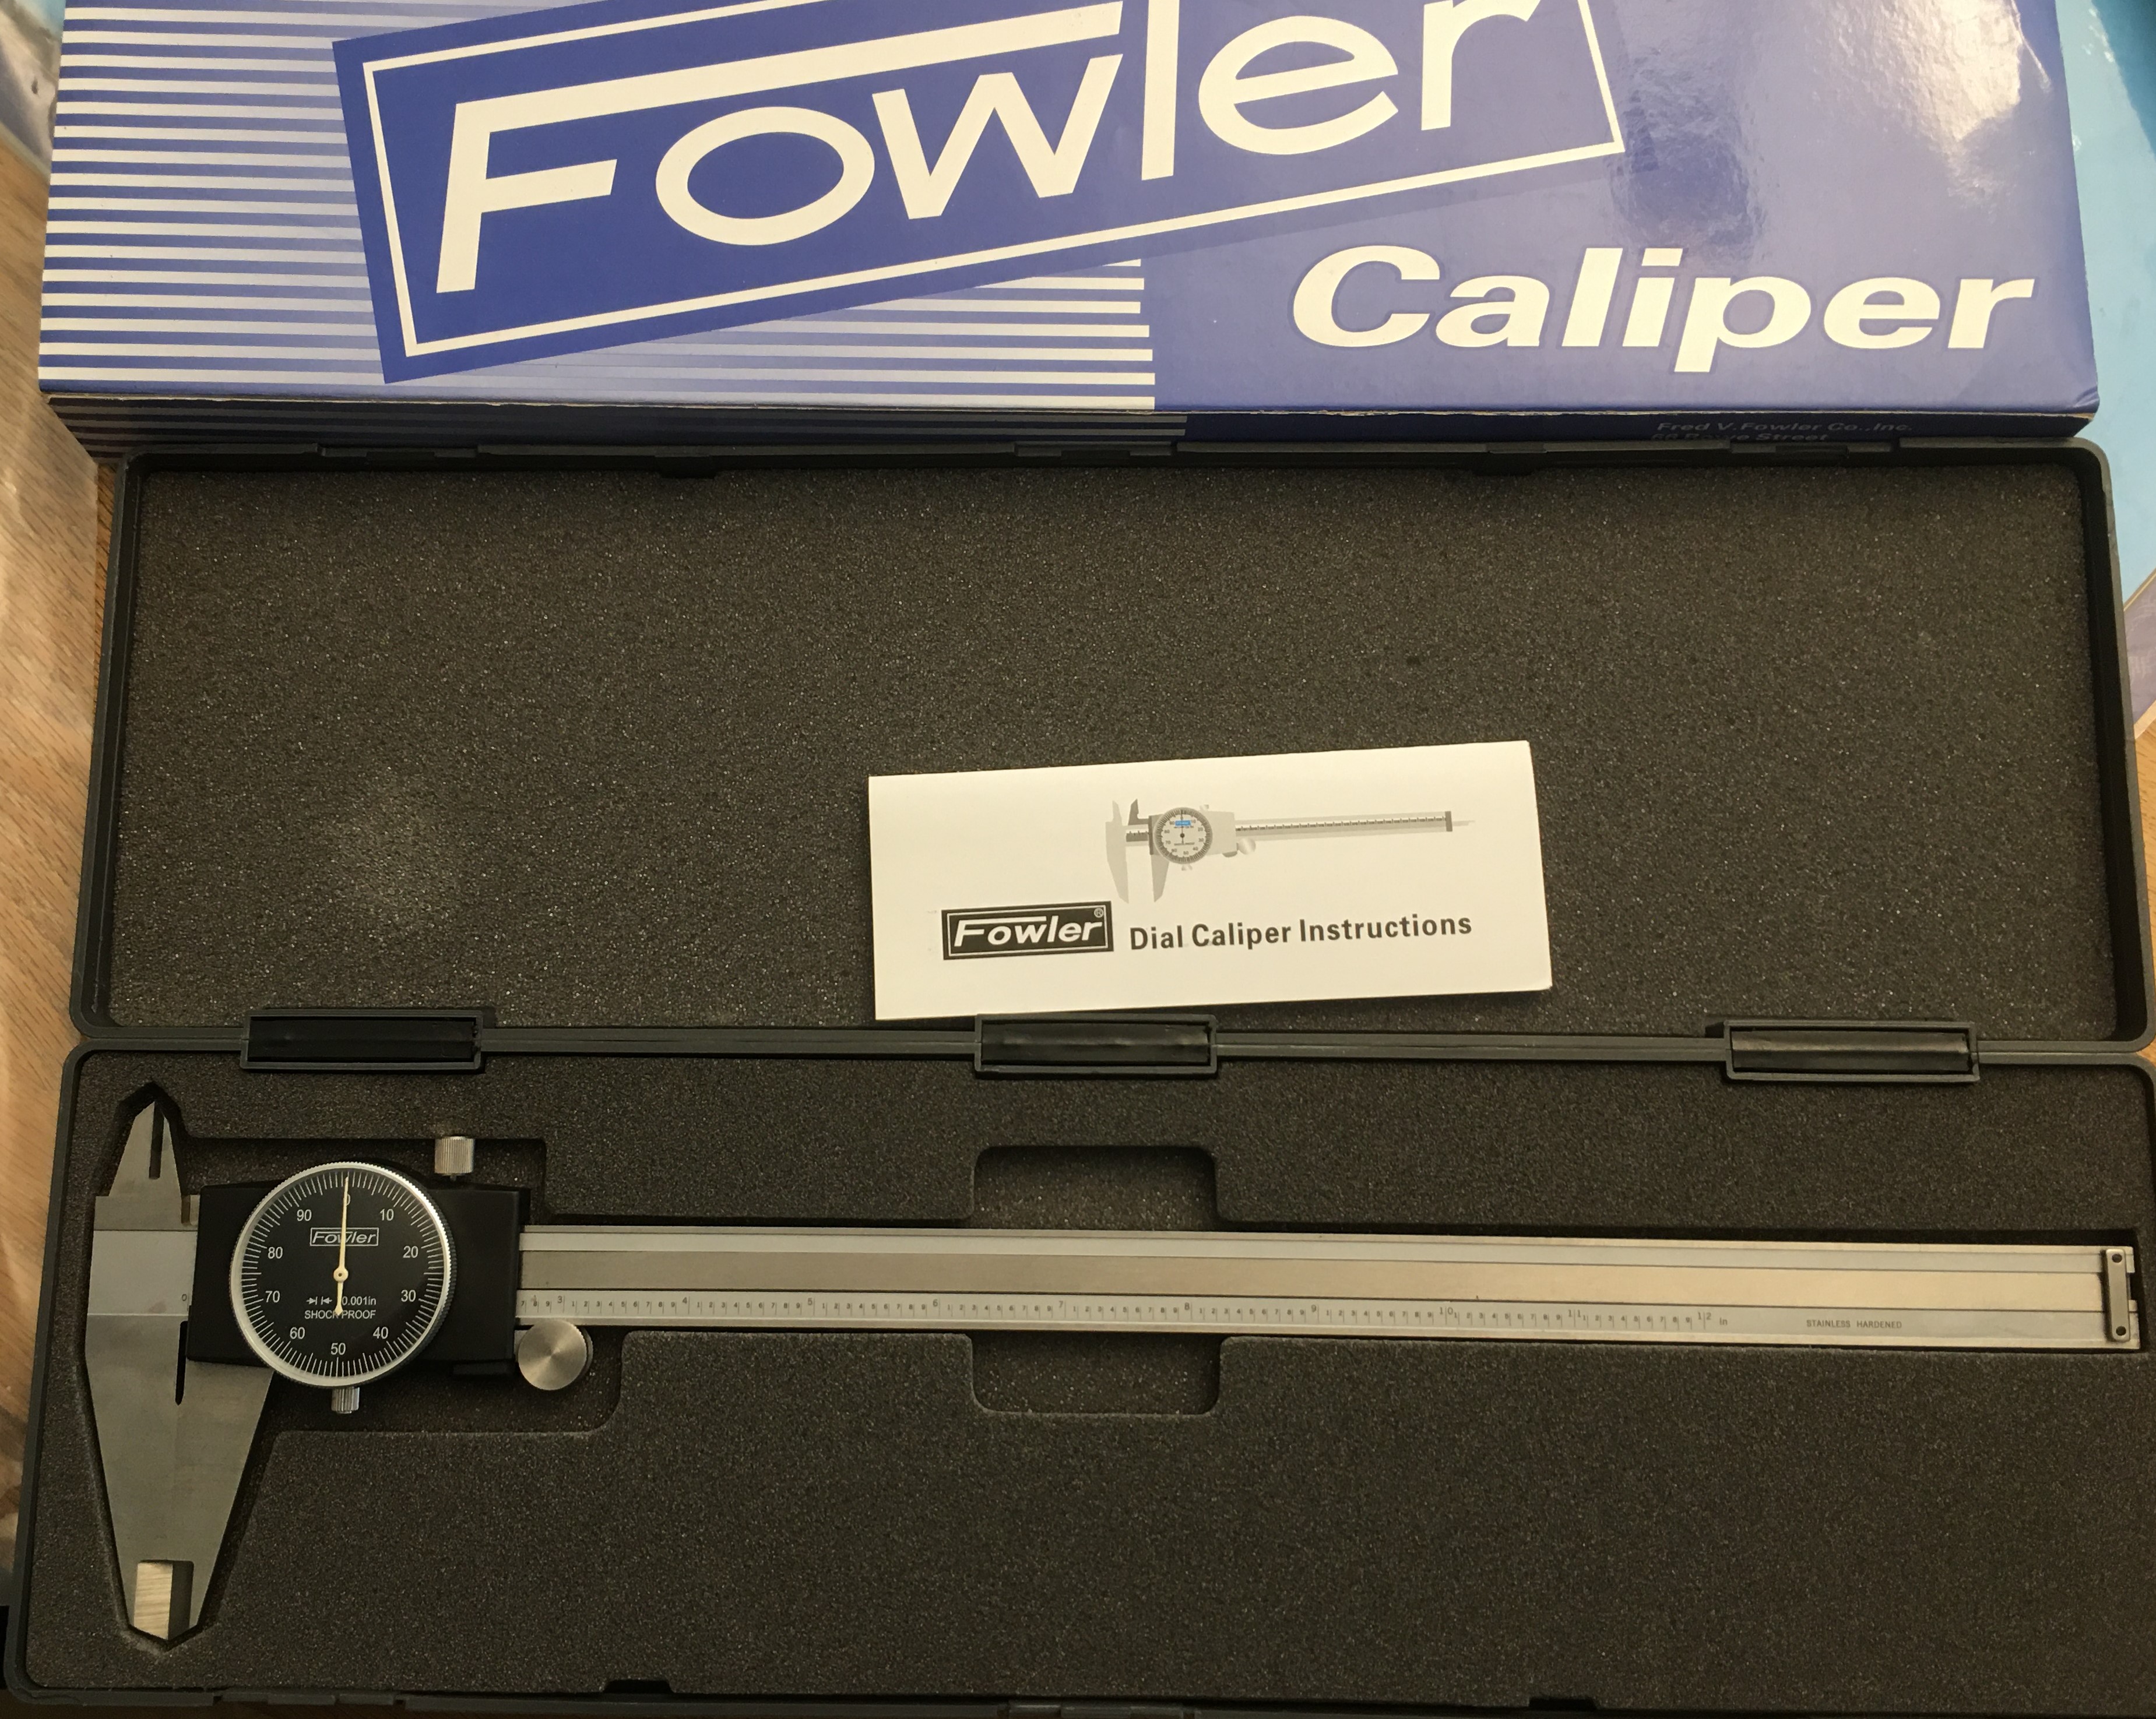 Fowler Stainless Steel Shockproof Dial Caliper, 0-12" Measuring Range, 0.005"